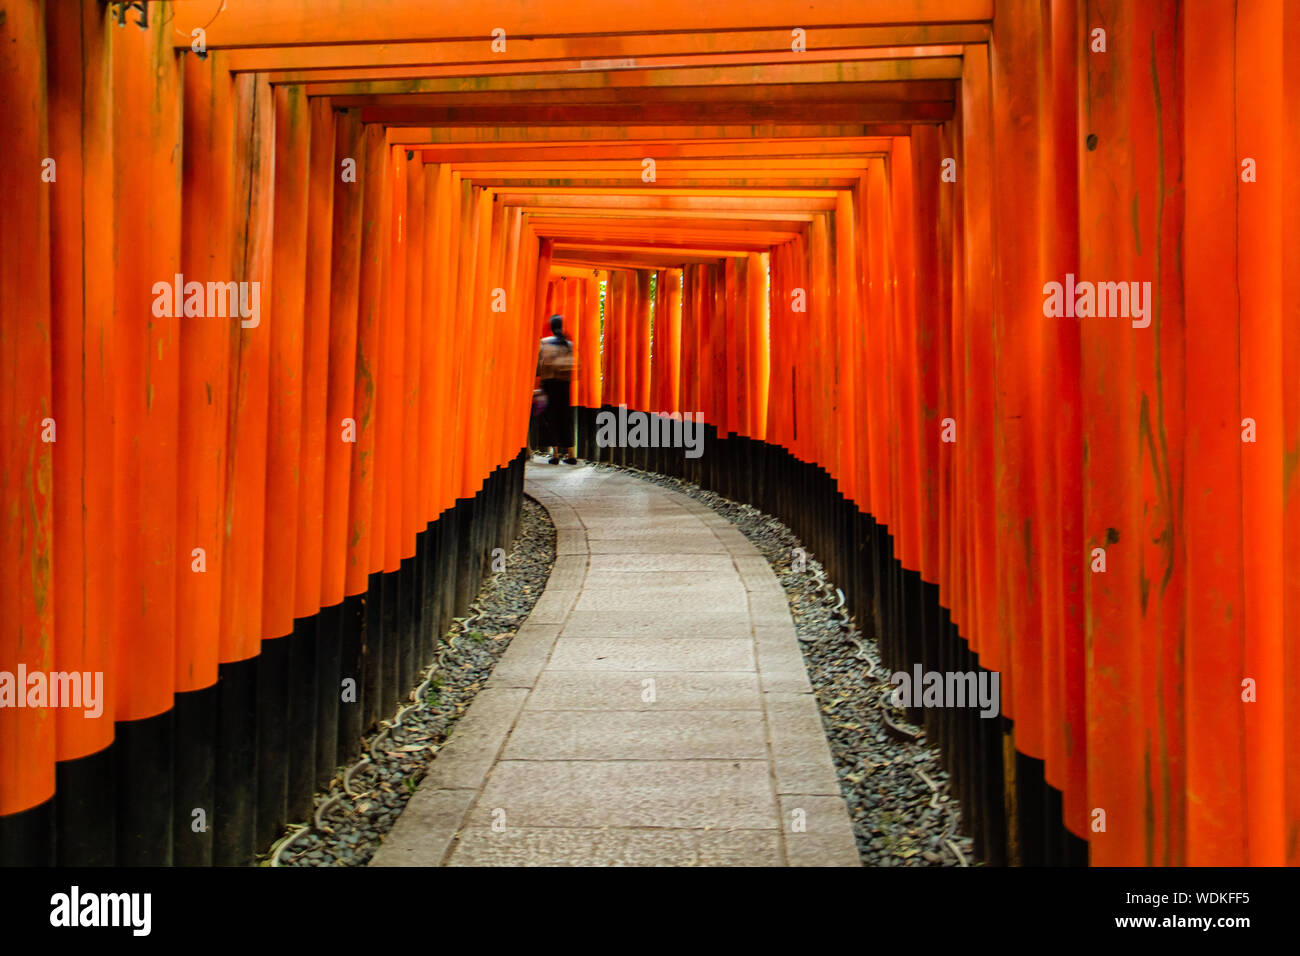 Senbon Torii gate-covered hiking path at Fushimi Inari Shrine ( Fushimi Inari Taisha) in Kyoto, Japan Stock Photo